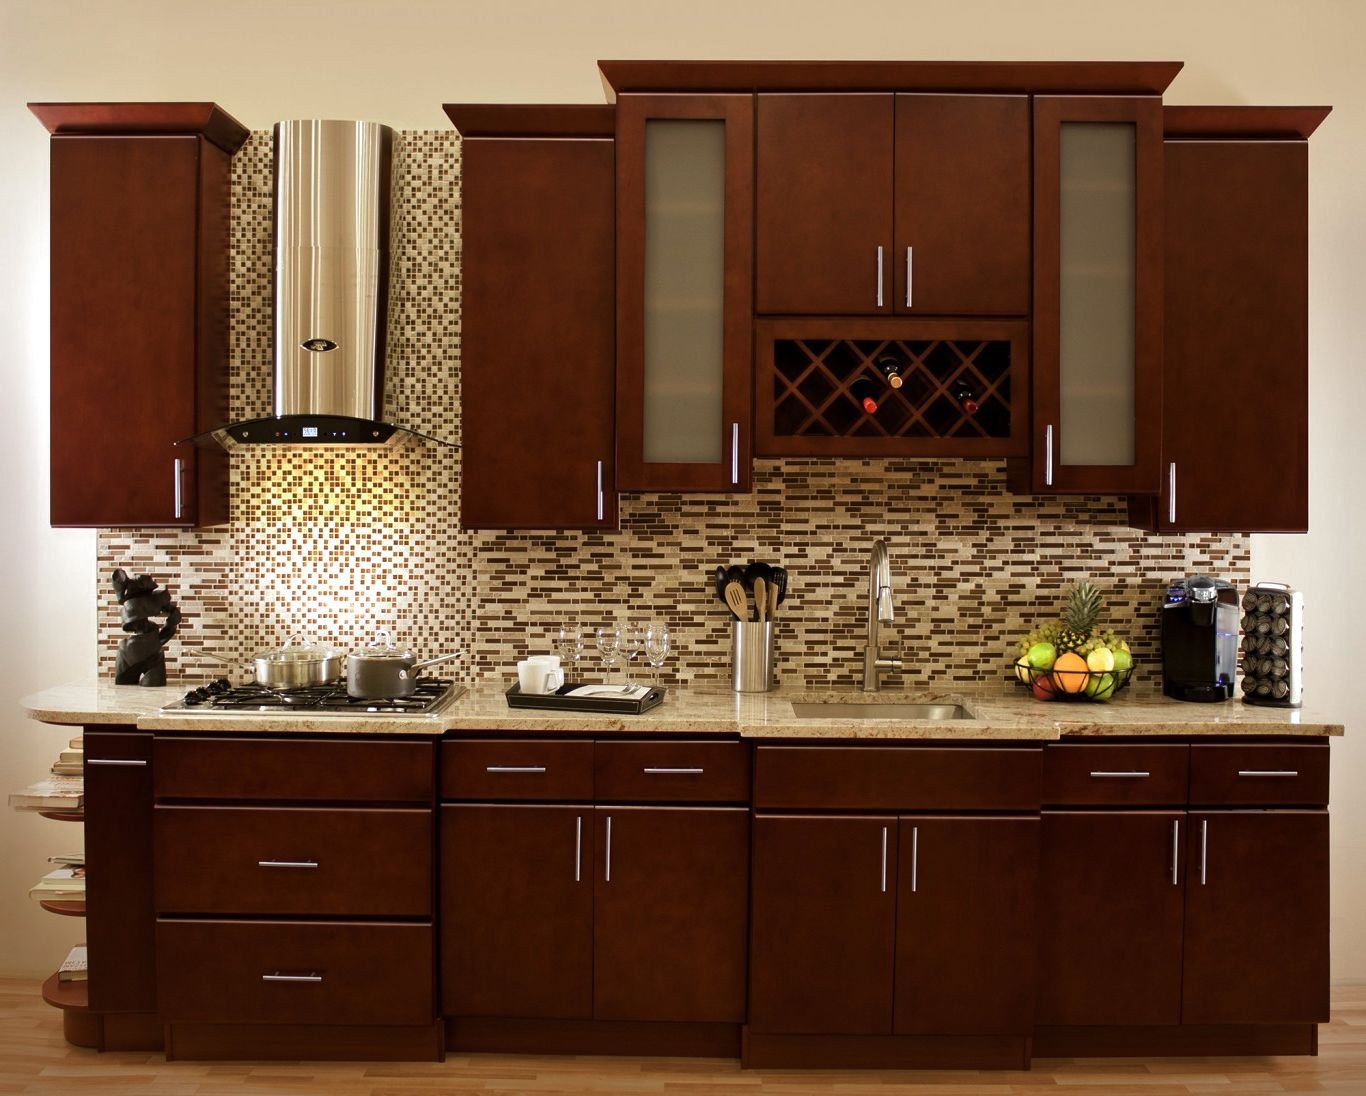 Cabinet Design For Small Kitchen
 Custom Kitchen Cabinets Designs for Your Lovely Kitchen